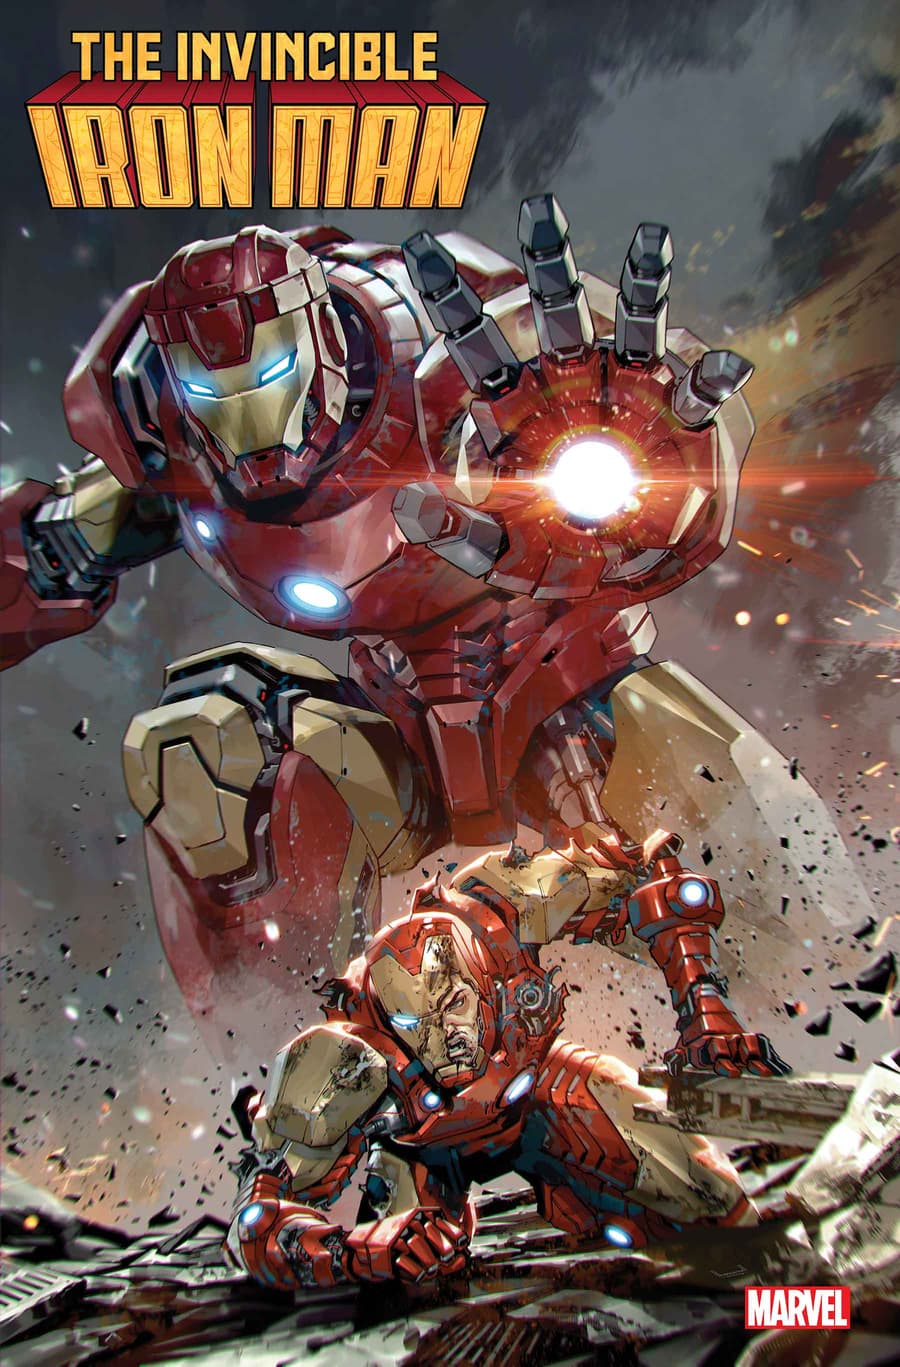 Invincible Iron Man #8 cover by Kael Ngu